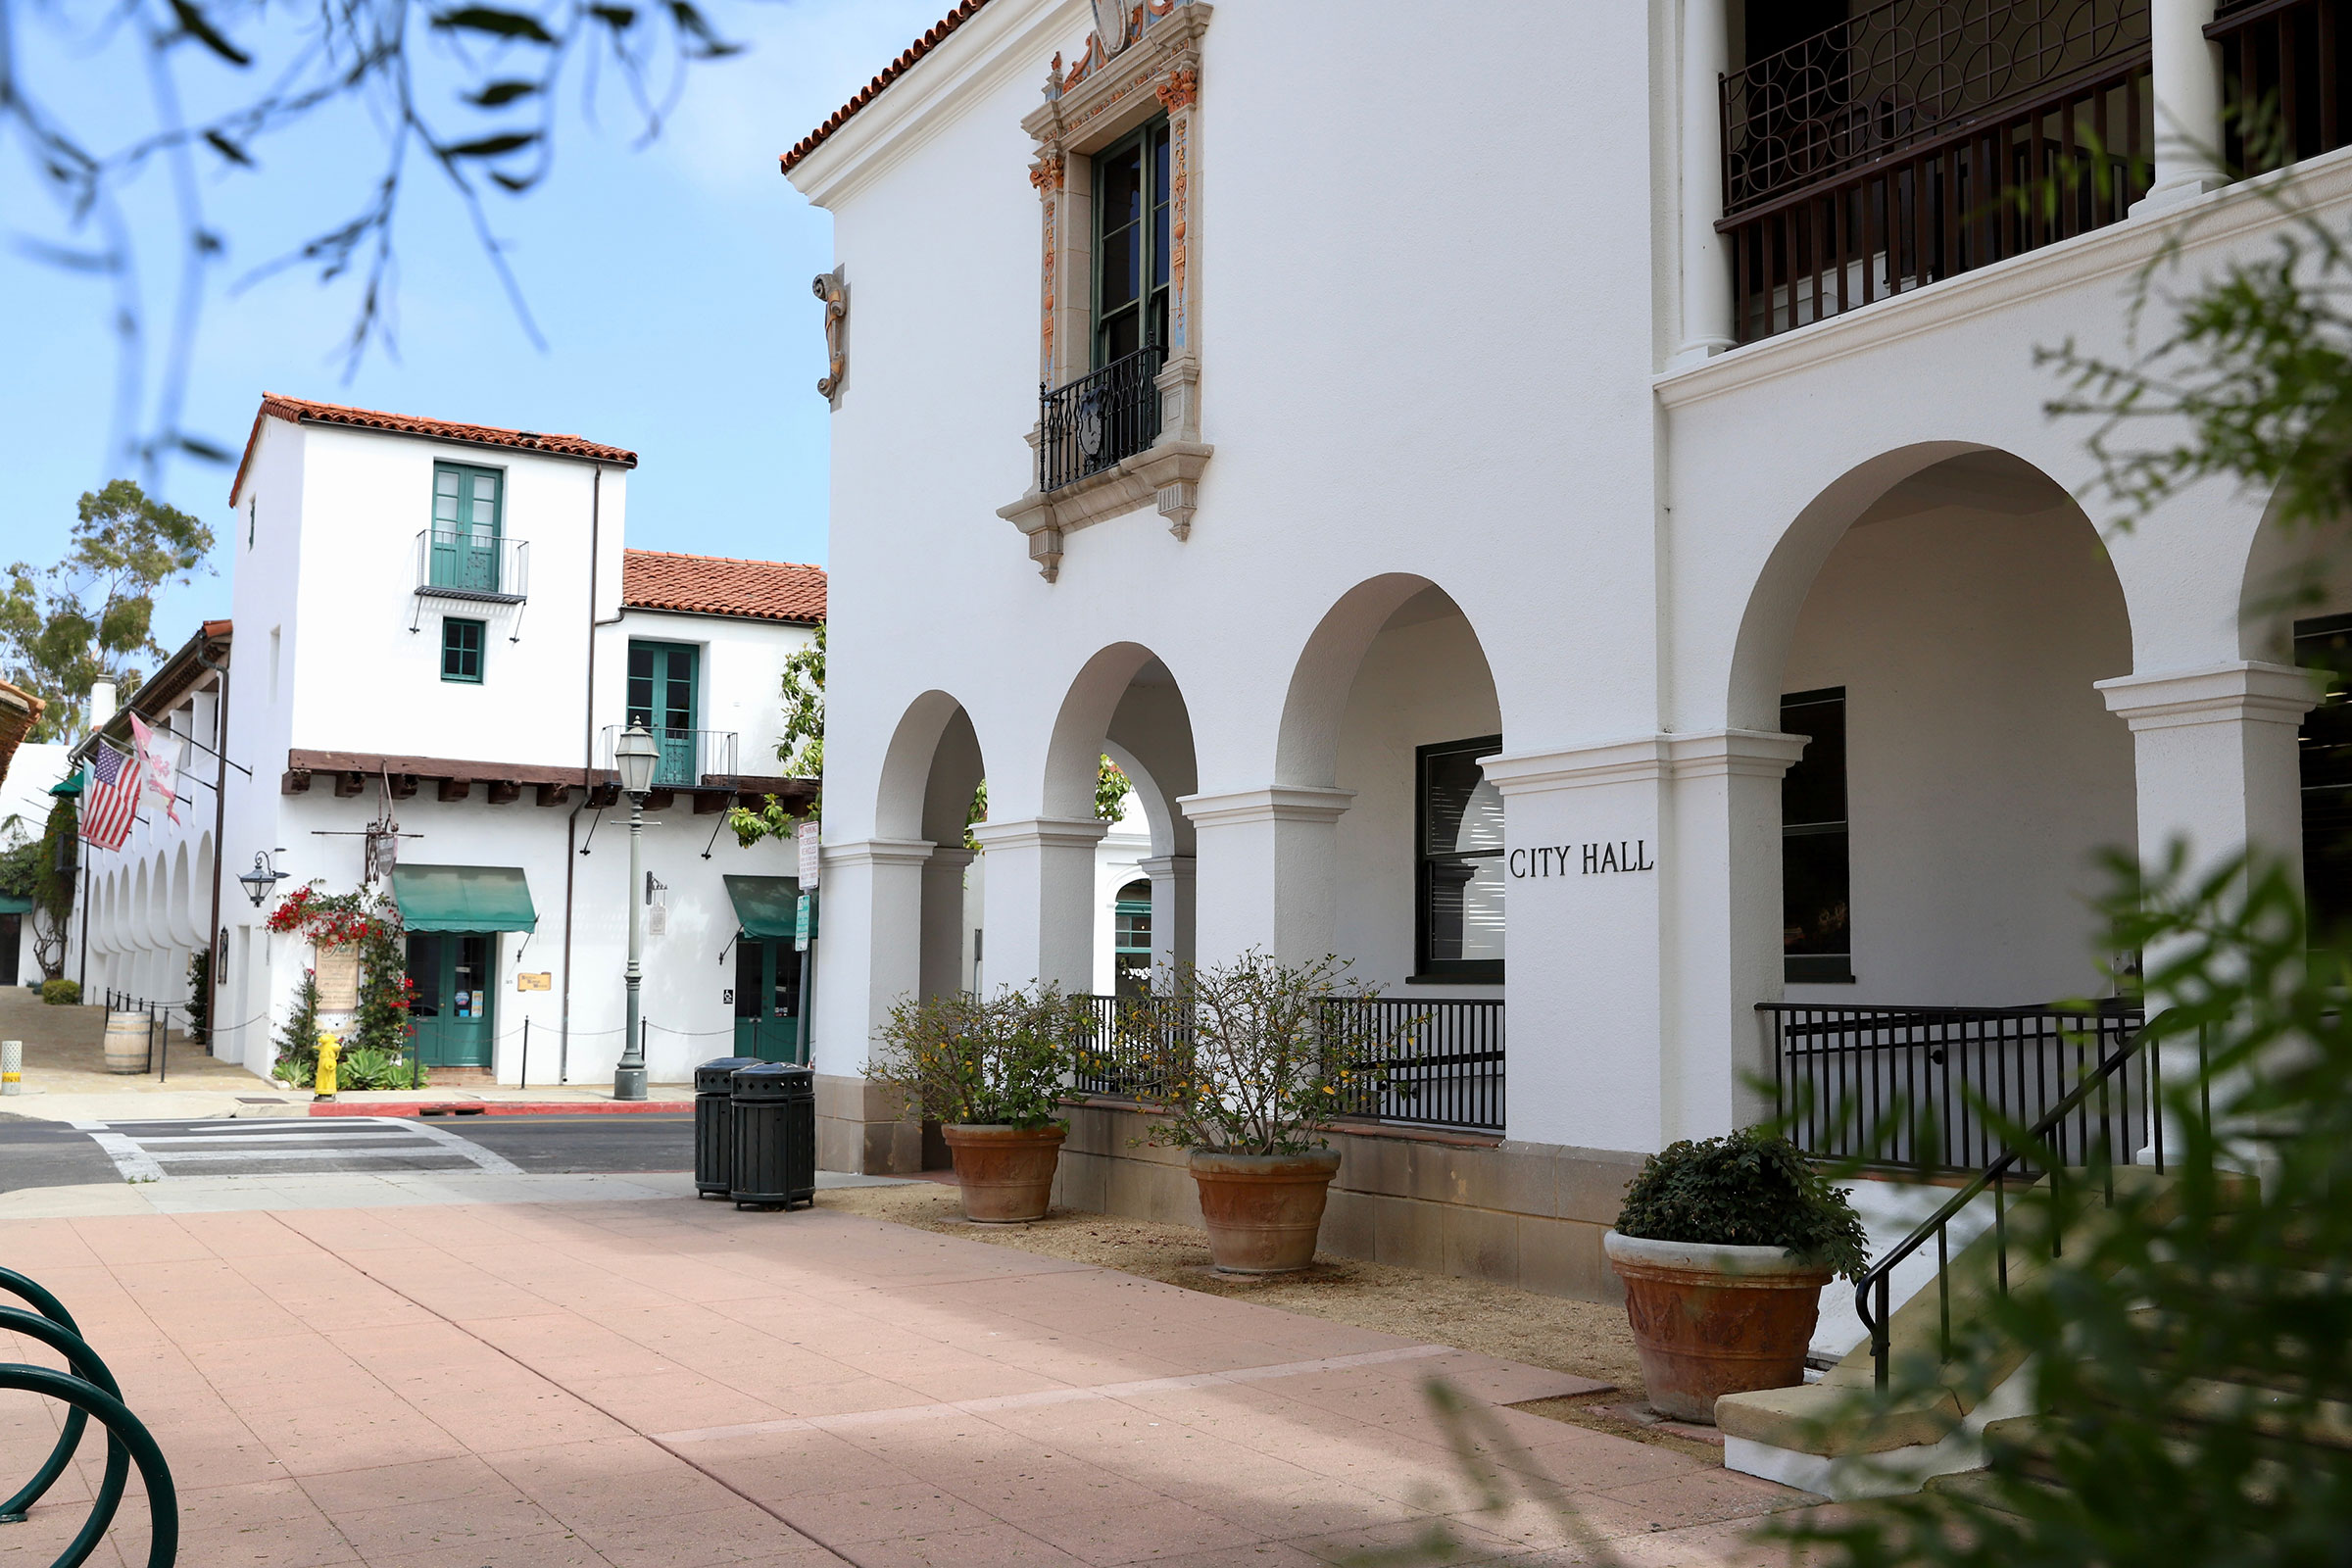 City Hall and El Paseo Downtown Santa Barbara from De la Guerra Plaza